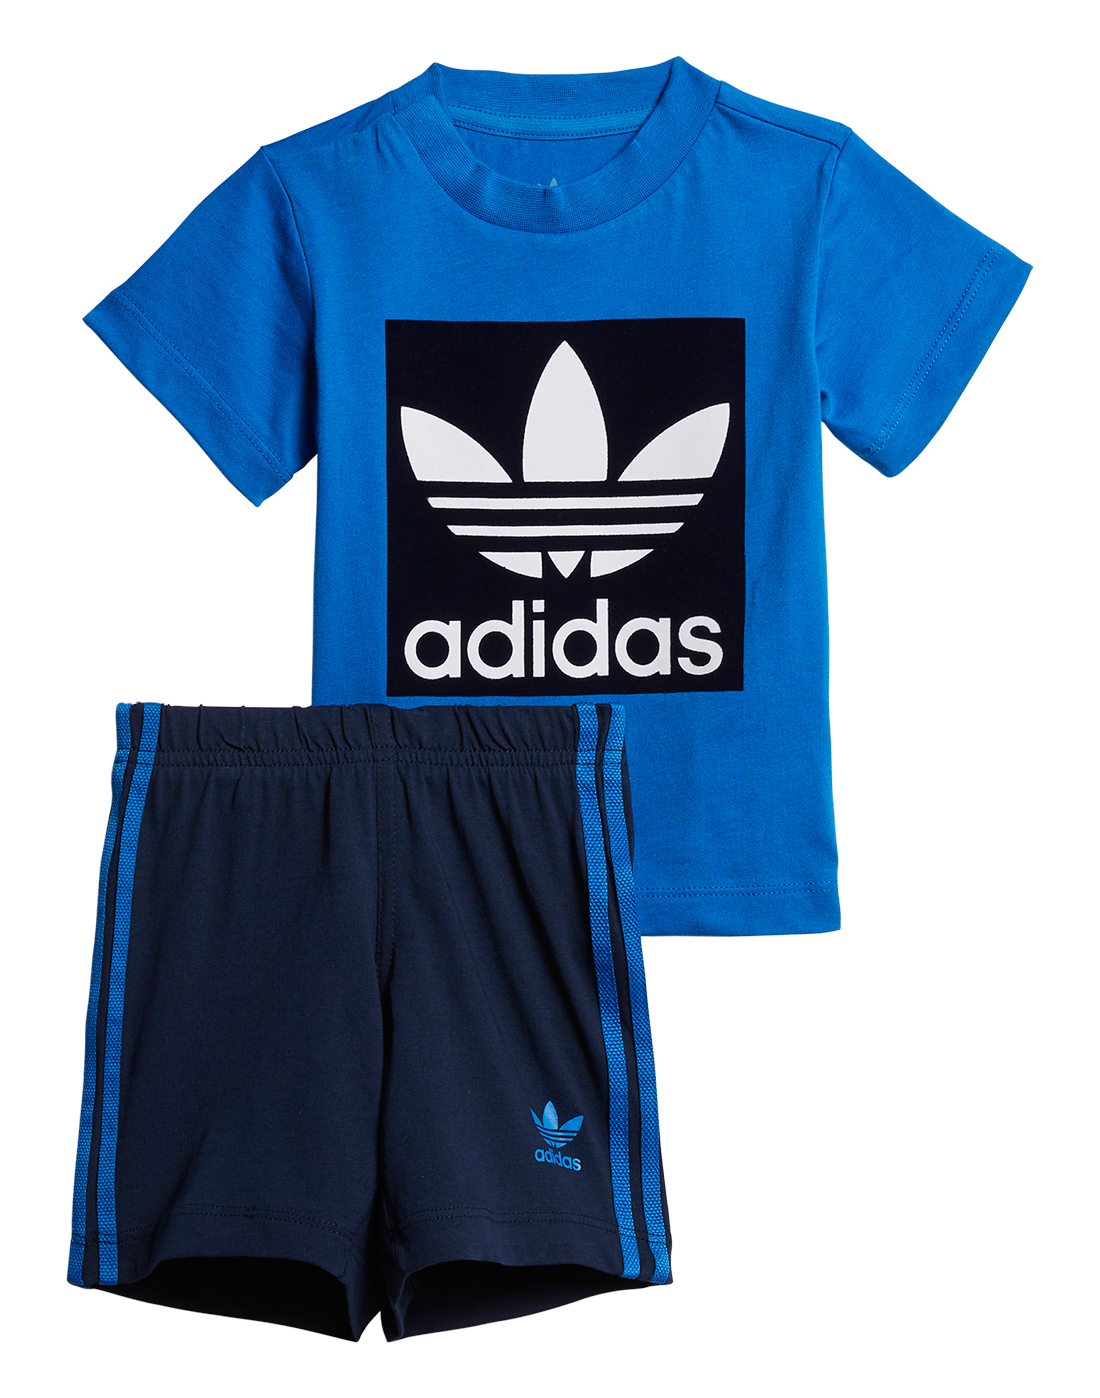 adidas Originals Infant Boys T-Shirt and Shorts Set - Blue | Life Style ...